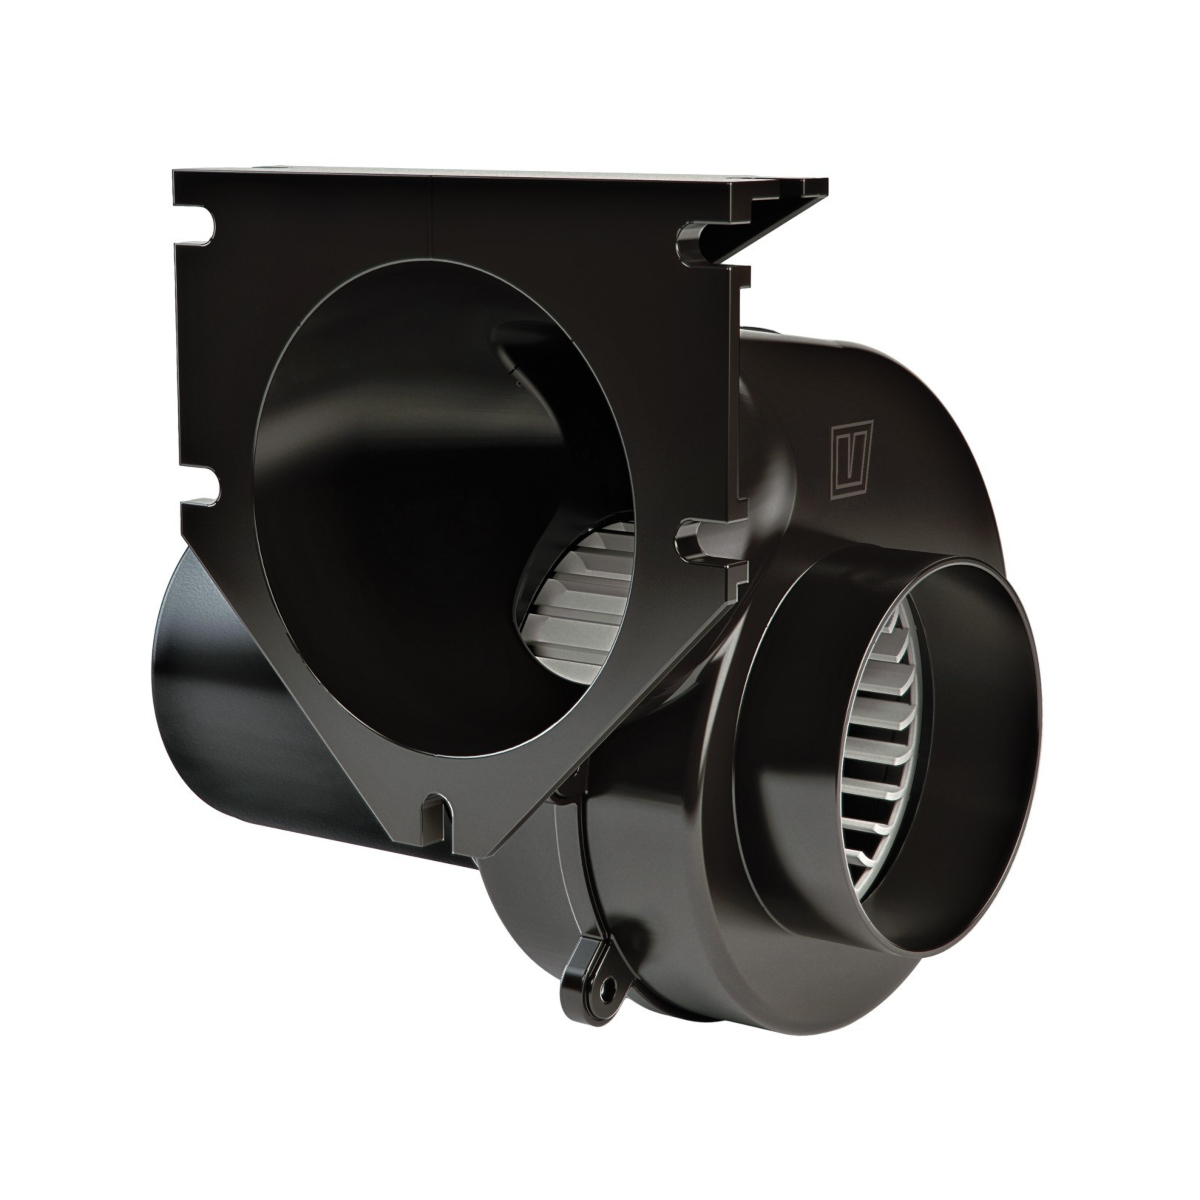 Vetus ventilateur-extracteur en ligne 12 v - ø76 mm